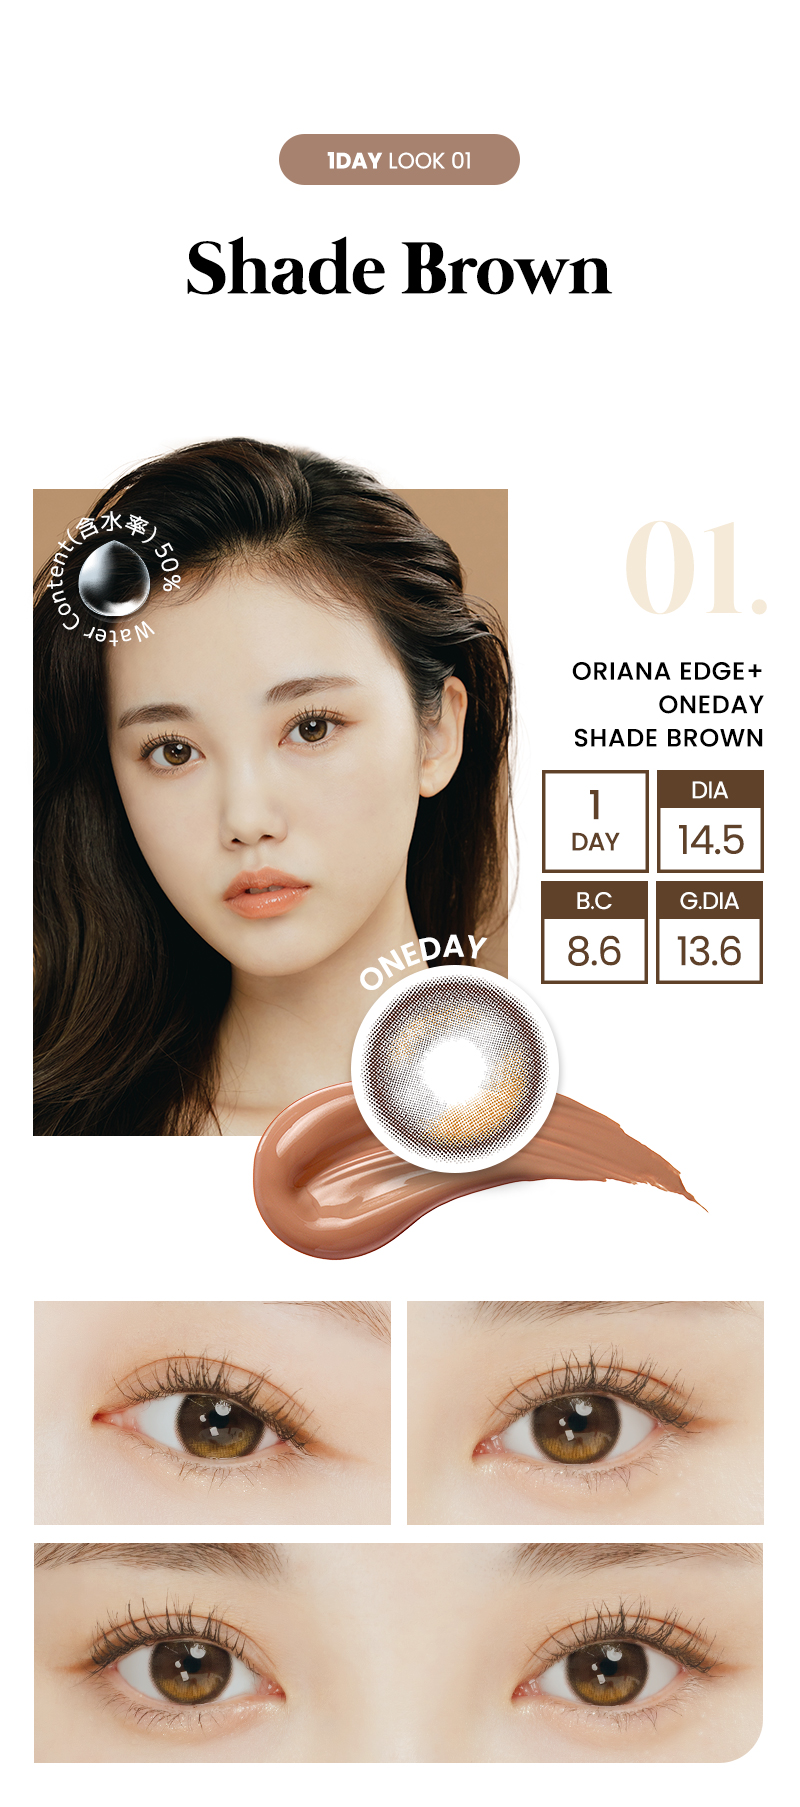 oriana-edge-plus-oneday shade brown